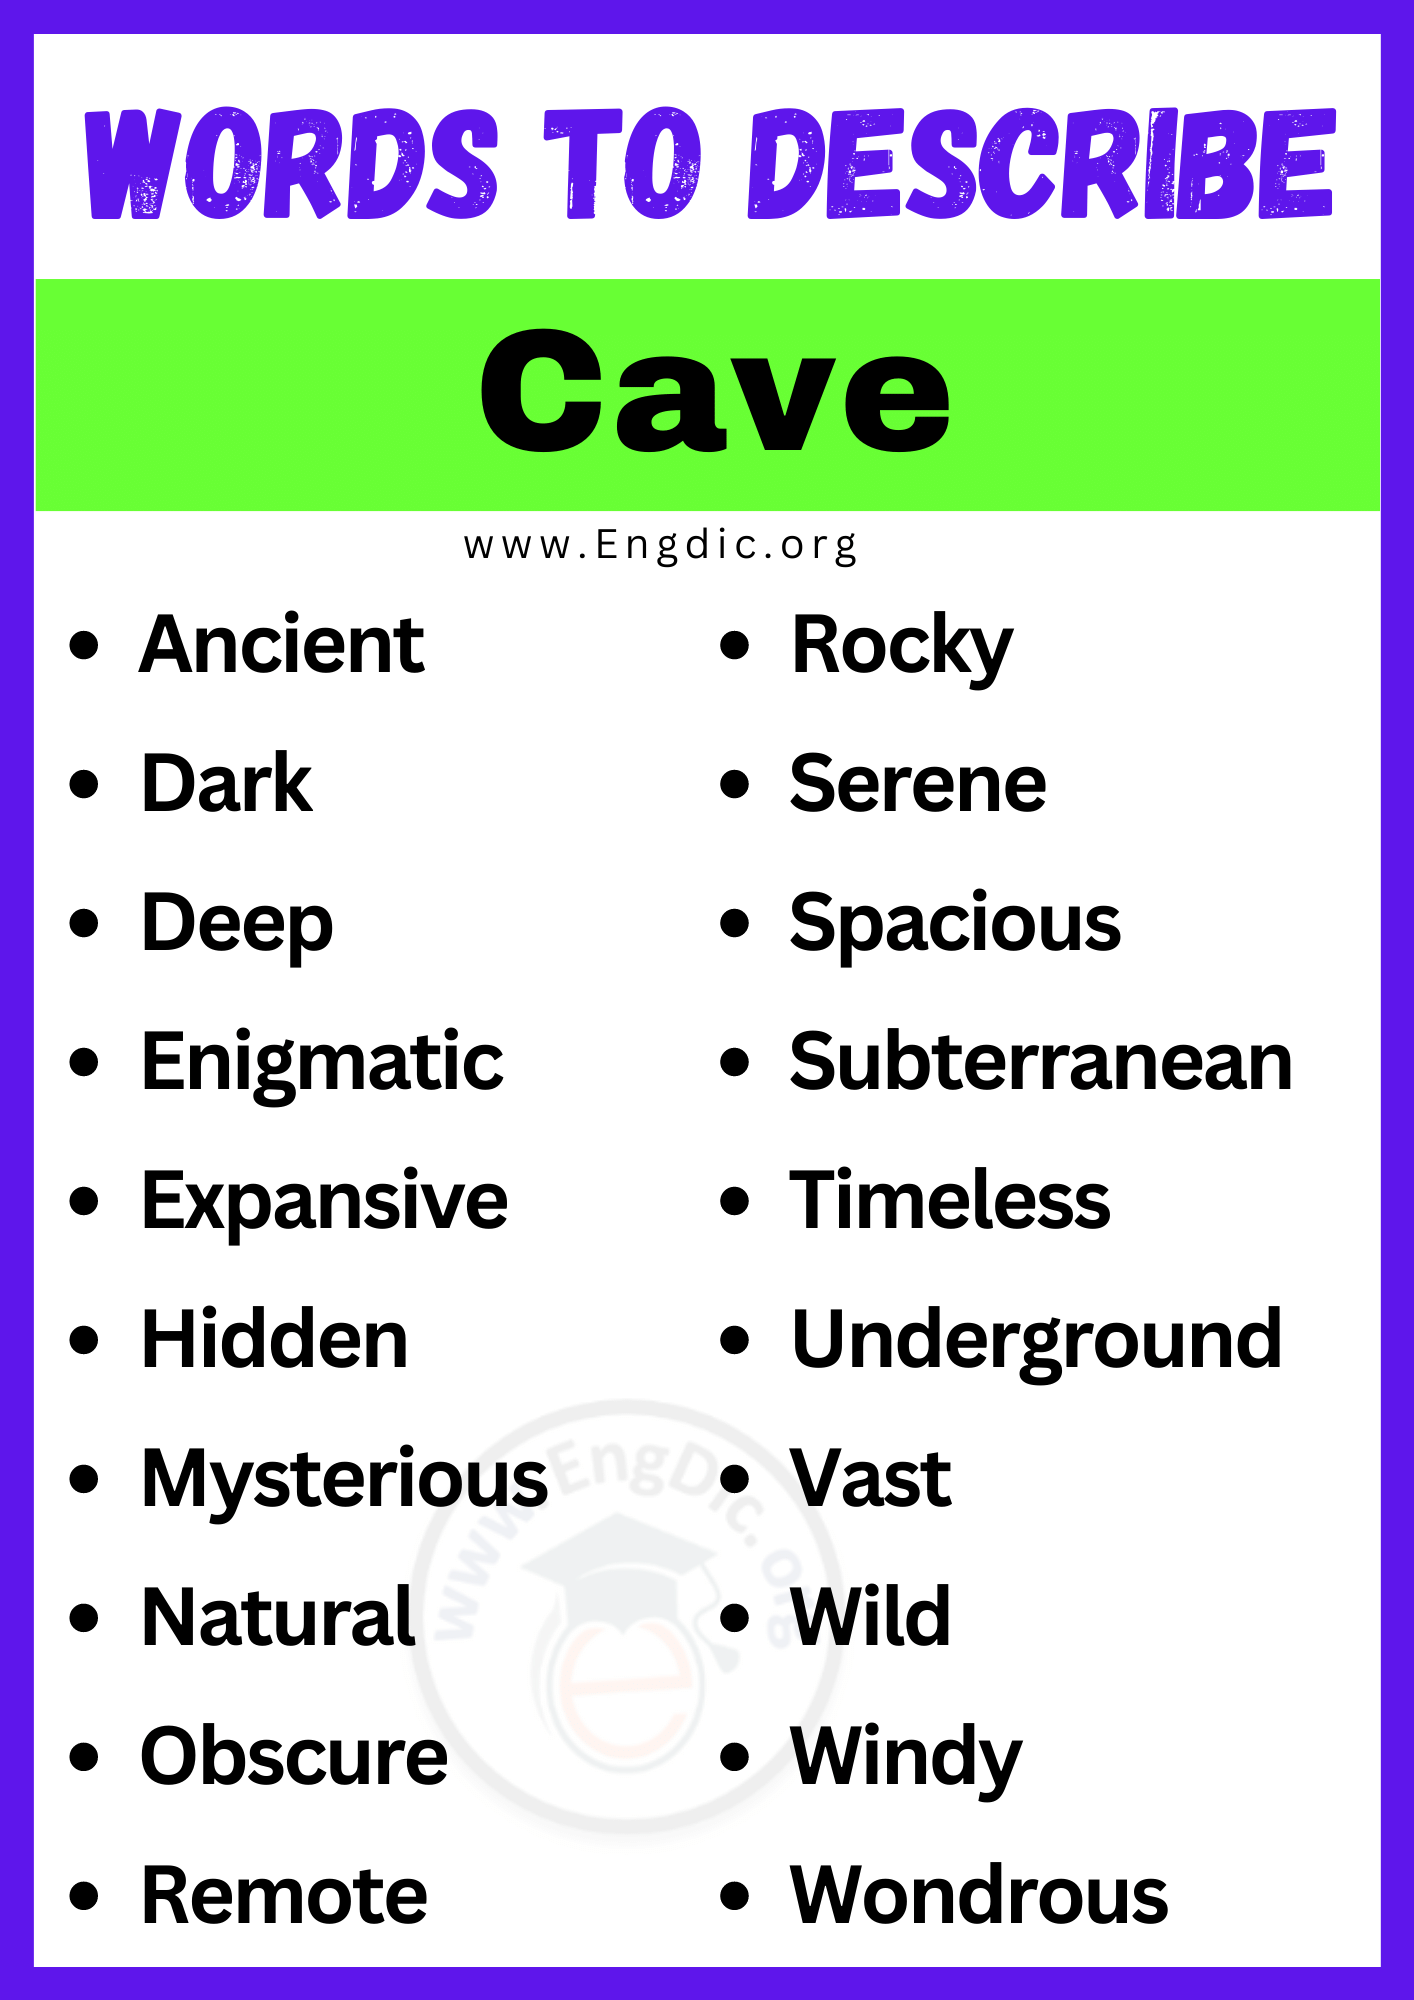 Words to Describe Cave